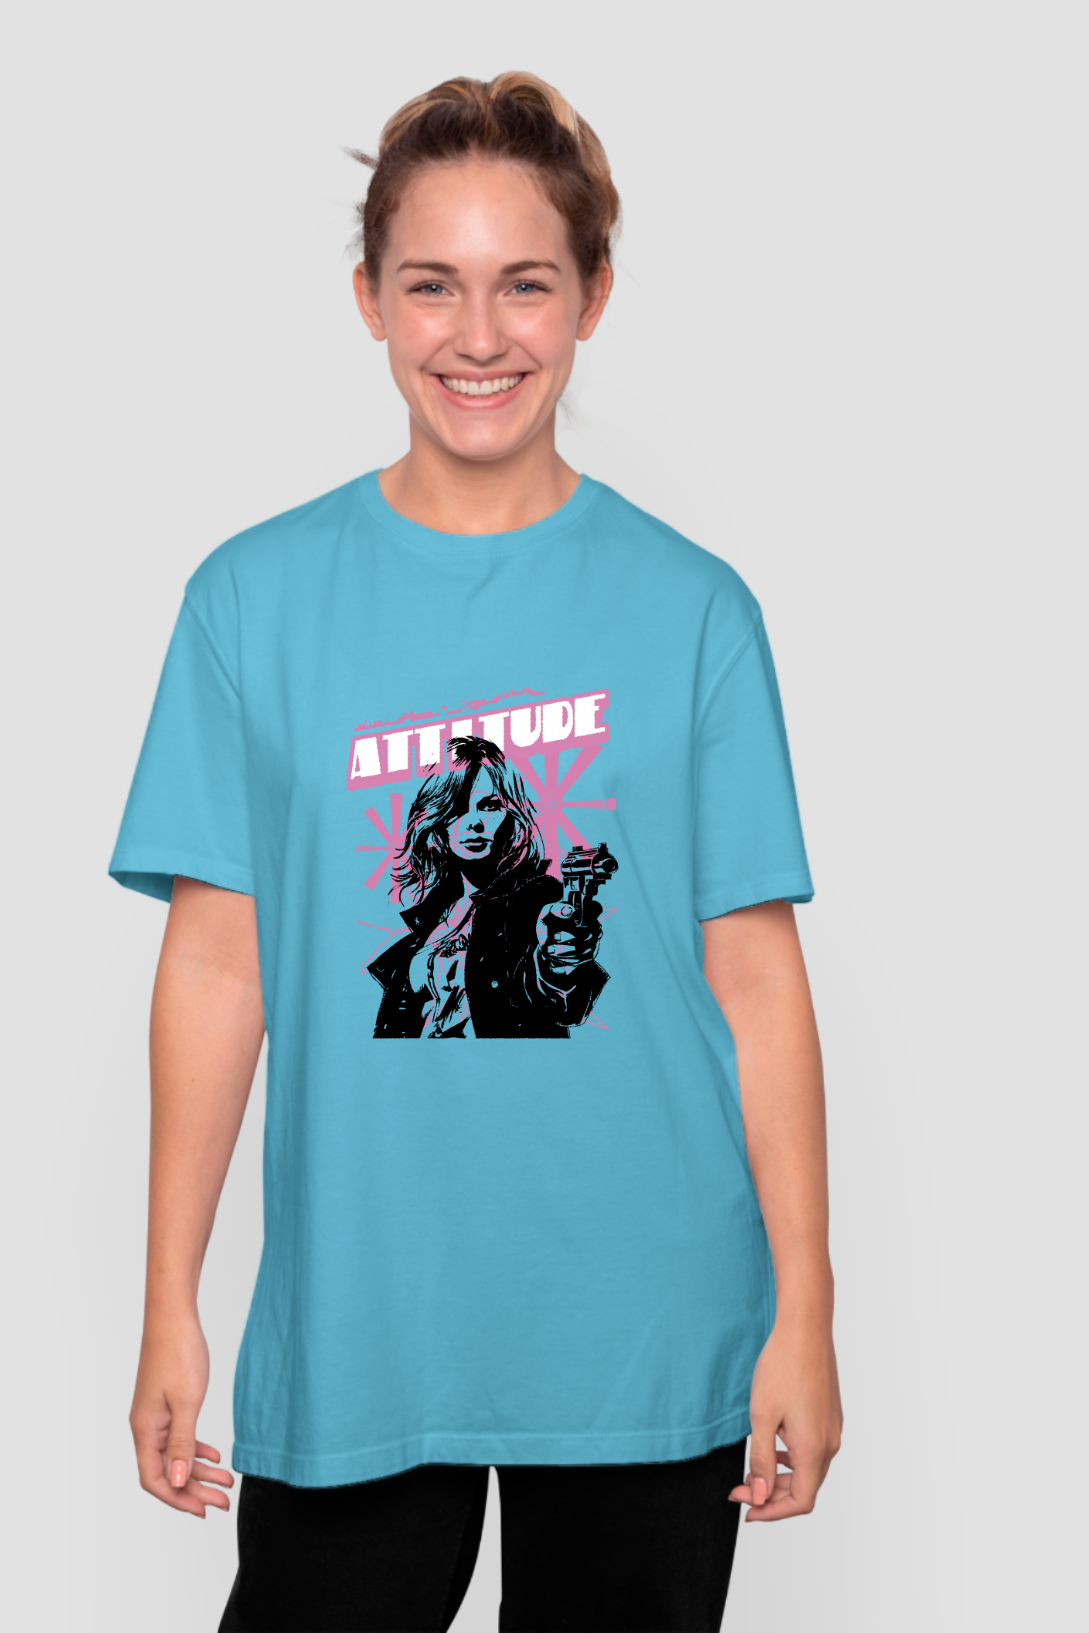 Attitude Matters Printed Oversized T-Shirt For Women - WowWaves - 7